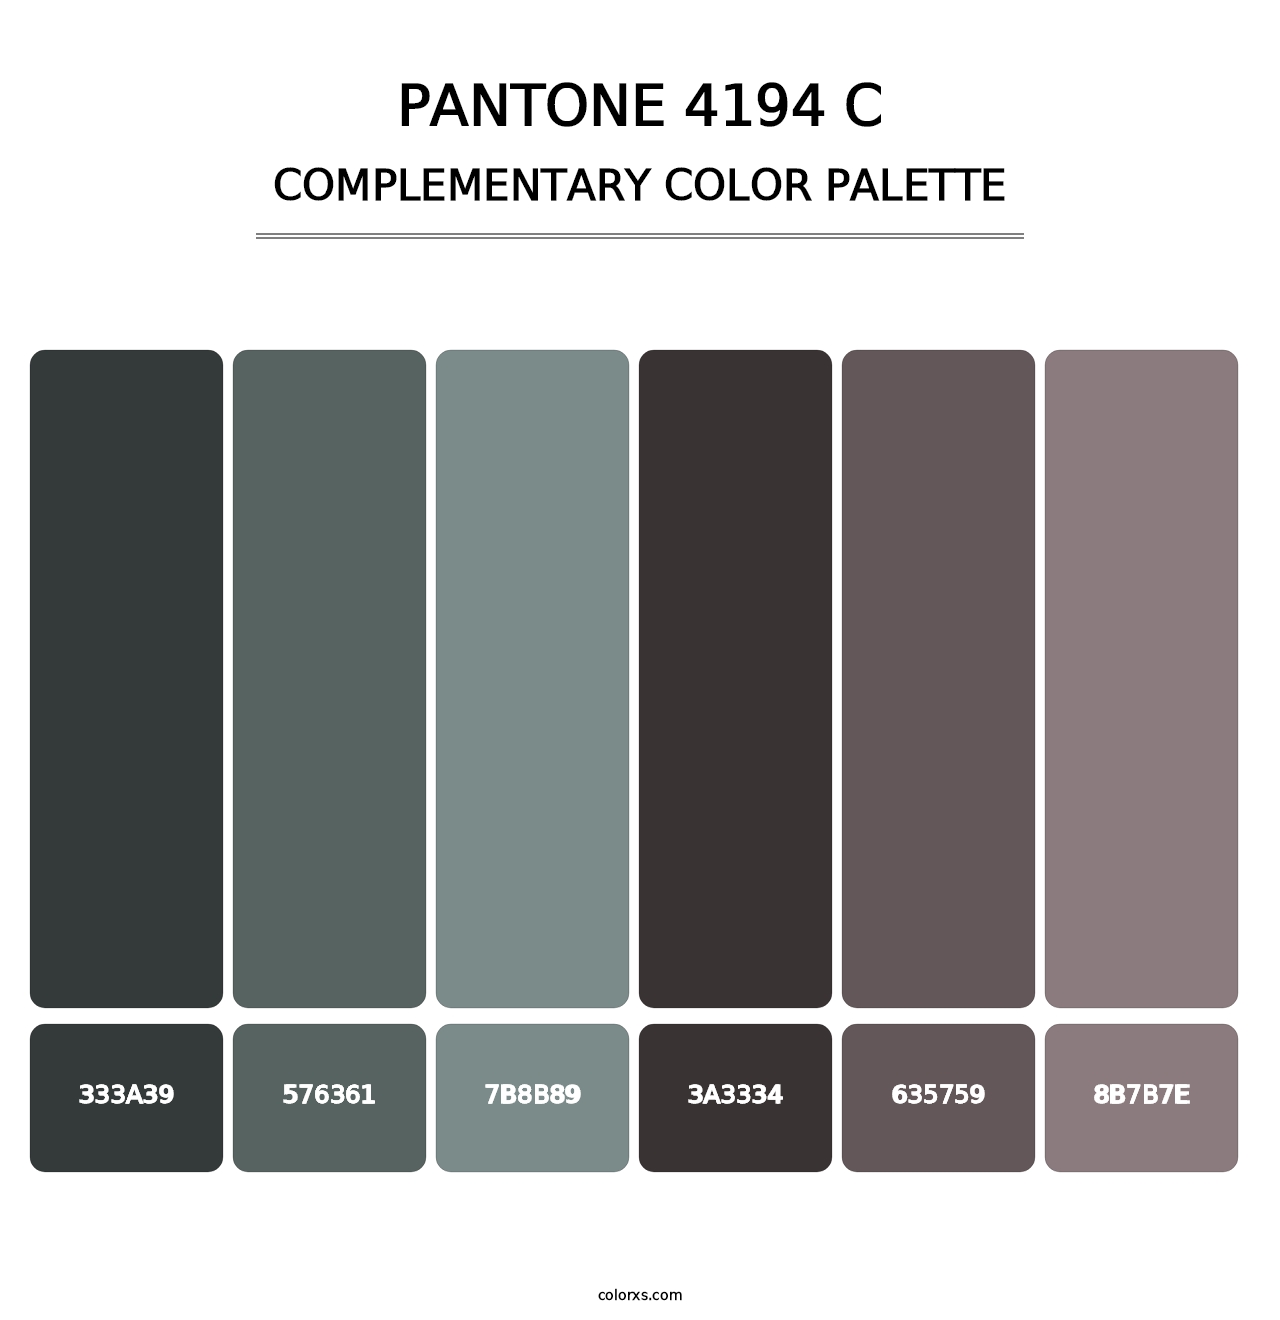 PANTONE 4194 C - Complementary Color Palette